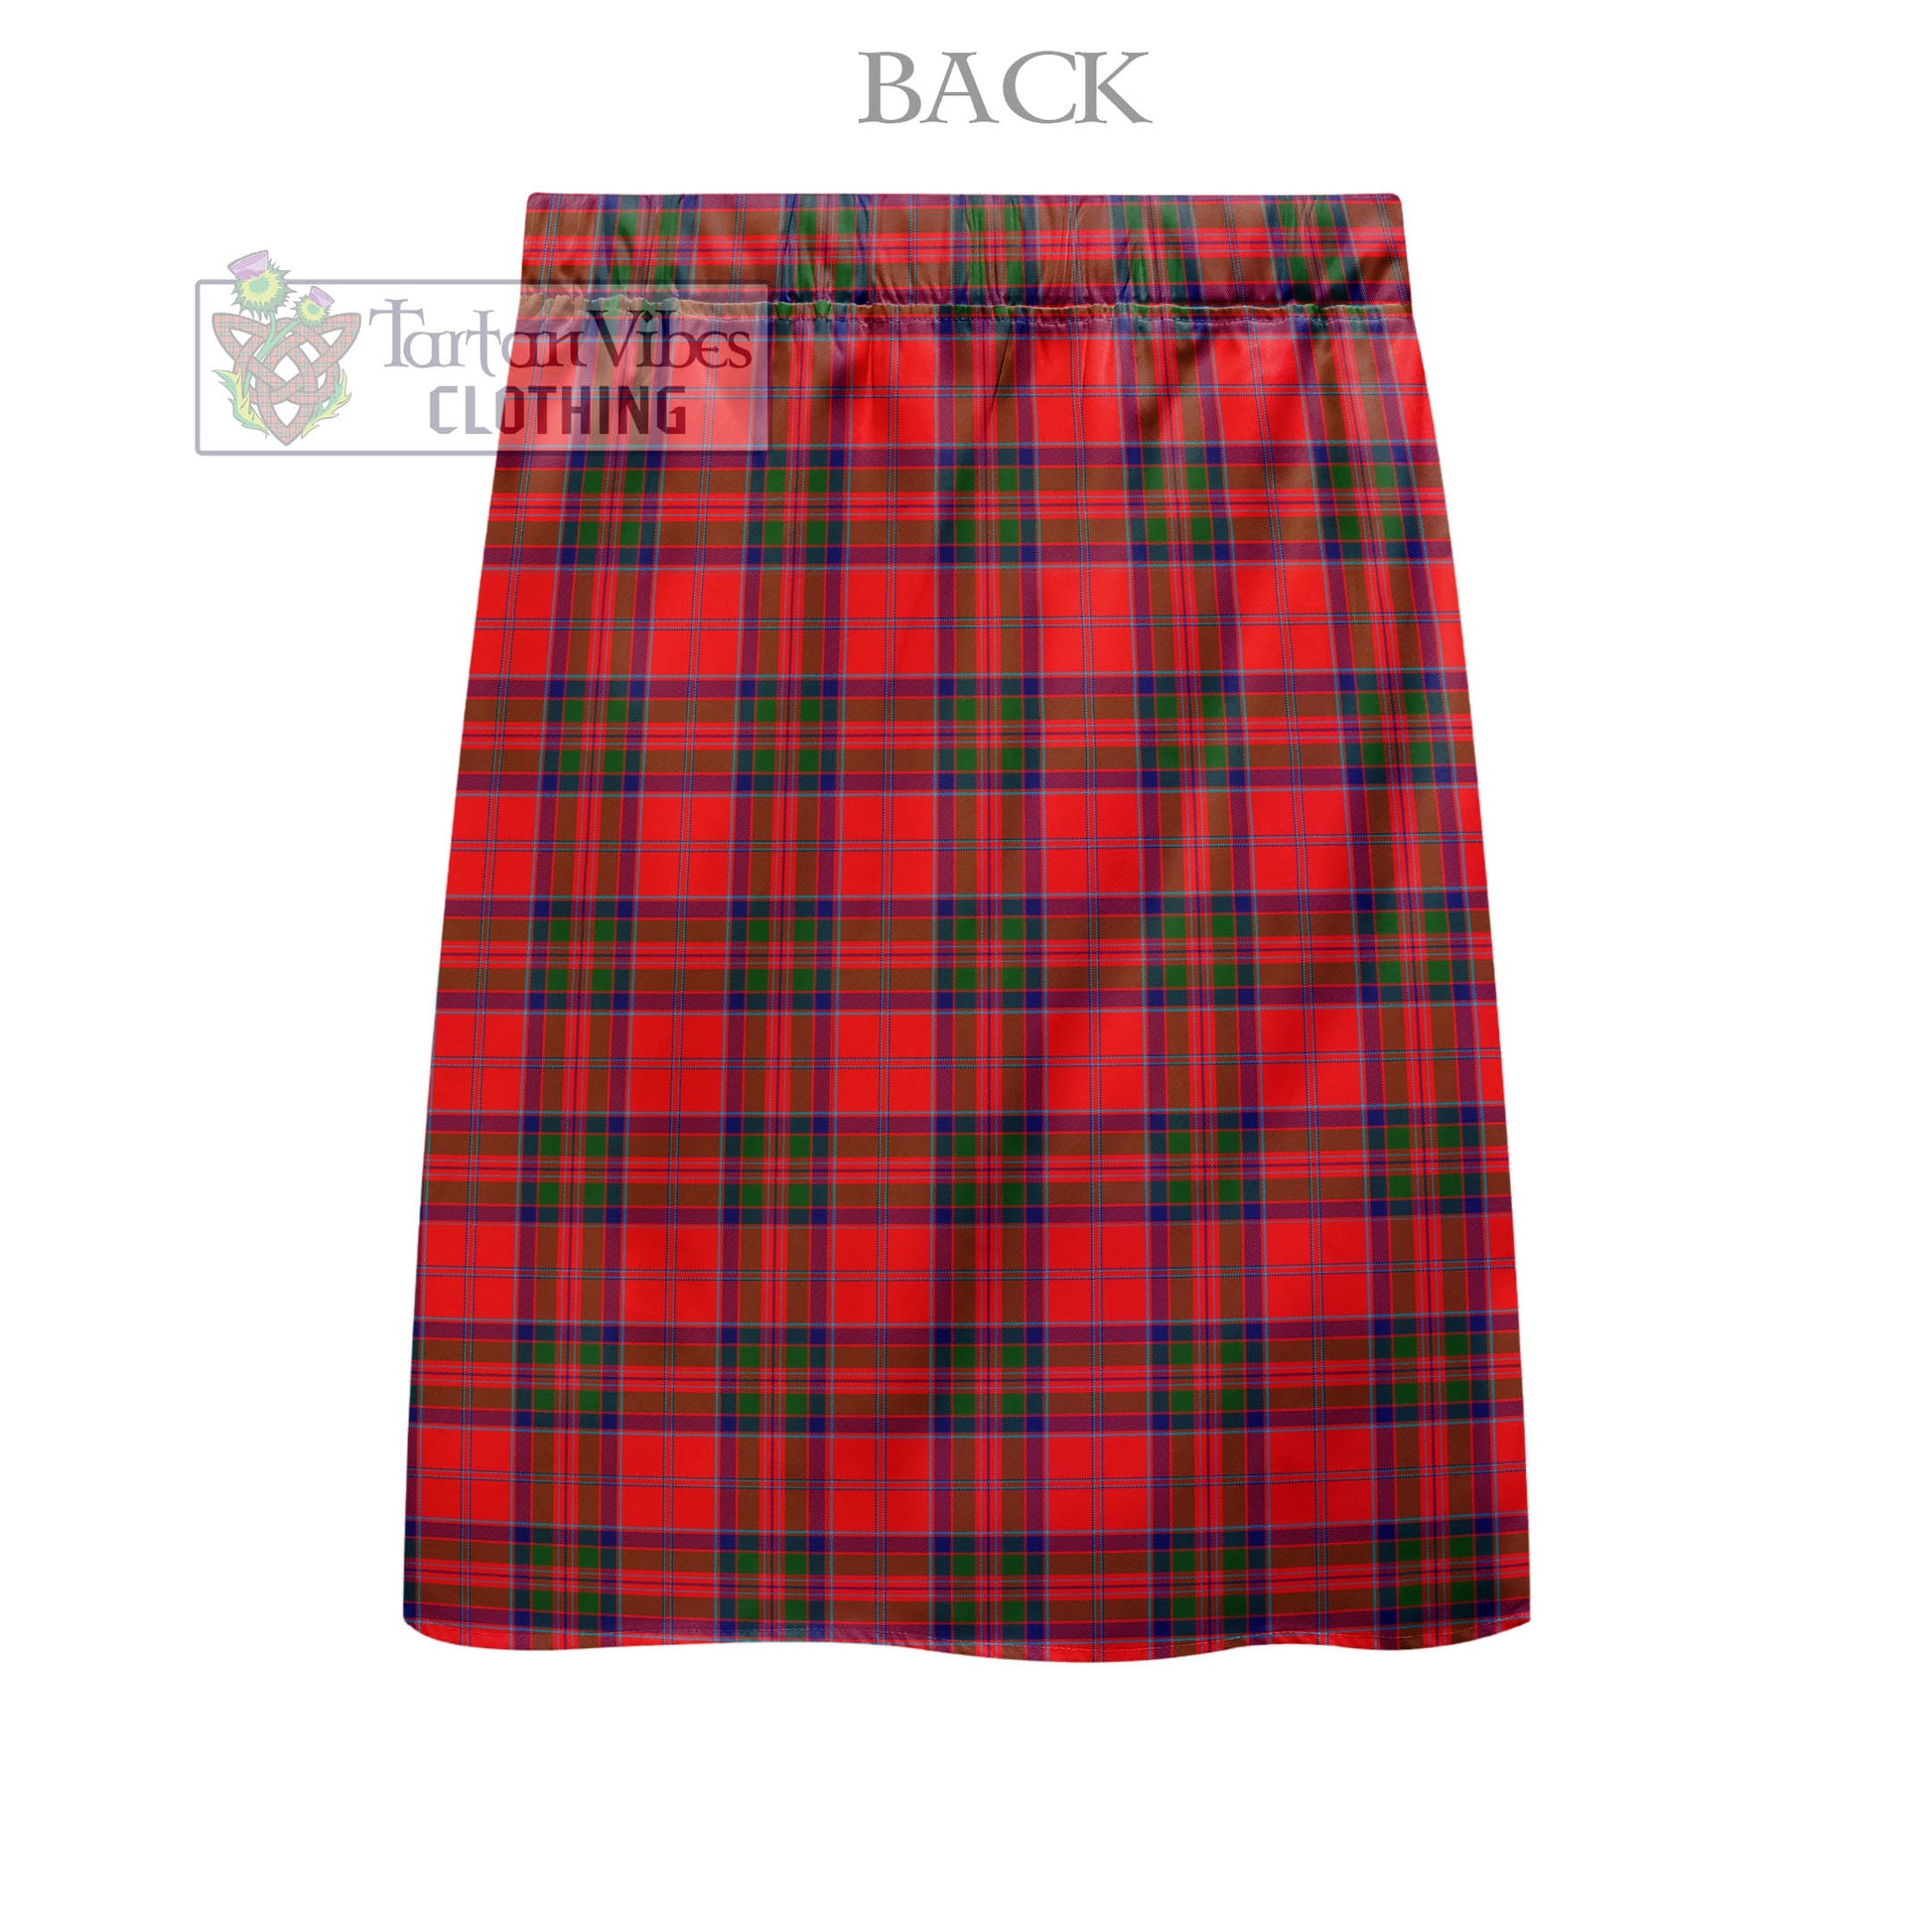 Tartan Vibes Clothing MacGillivray Modern Tartan Men's Pleated Skirt - Fashion Casual Retro Scottish Style